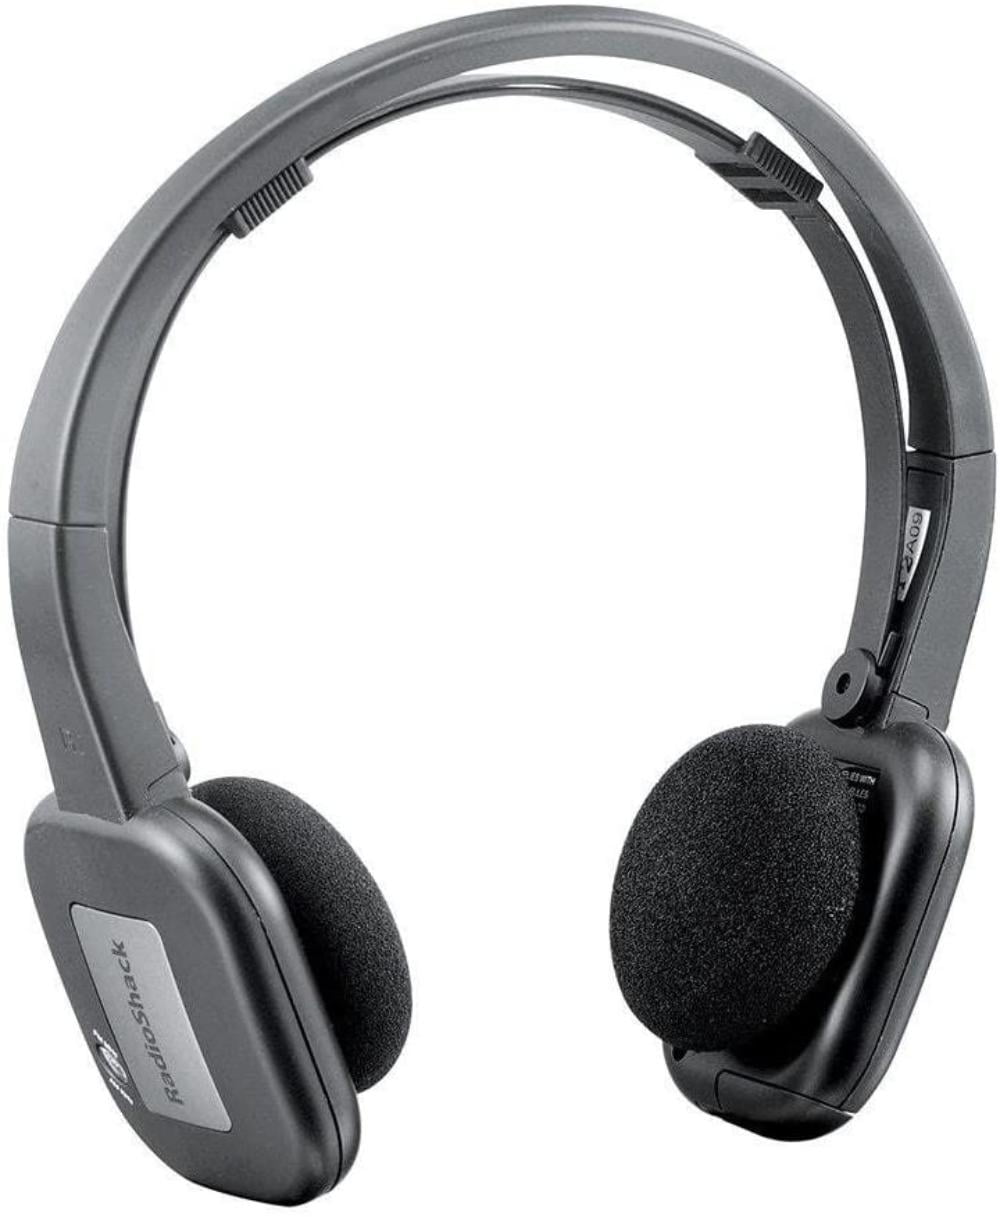 Panasonic fm stereo Headset RF-60. Радио наушники. Наушники для радиомониьоров. Am fm Radio Headphone.